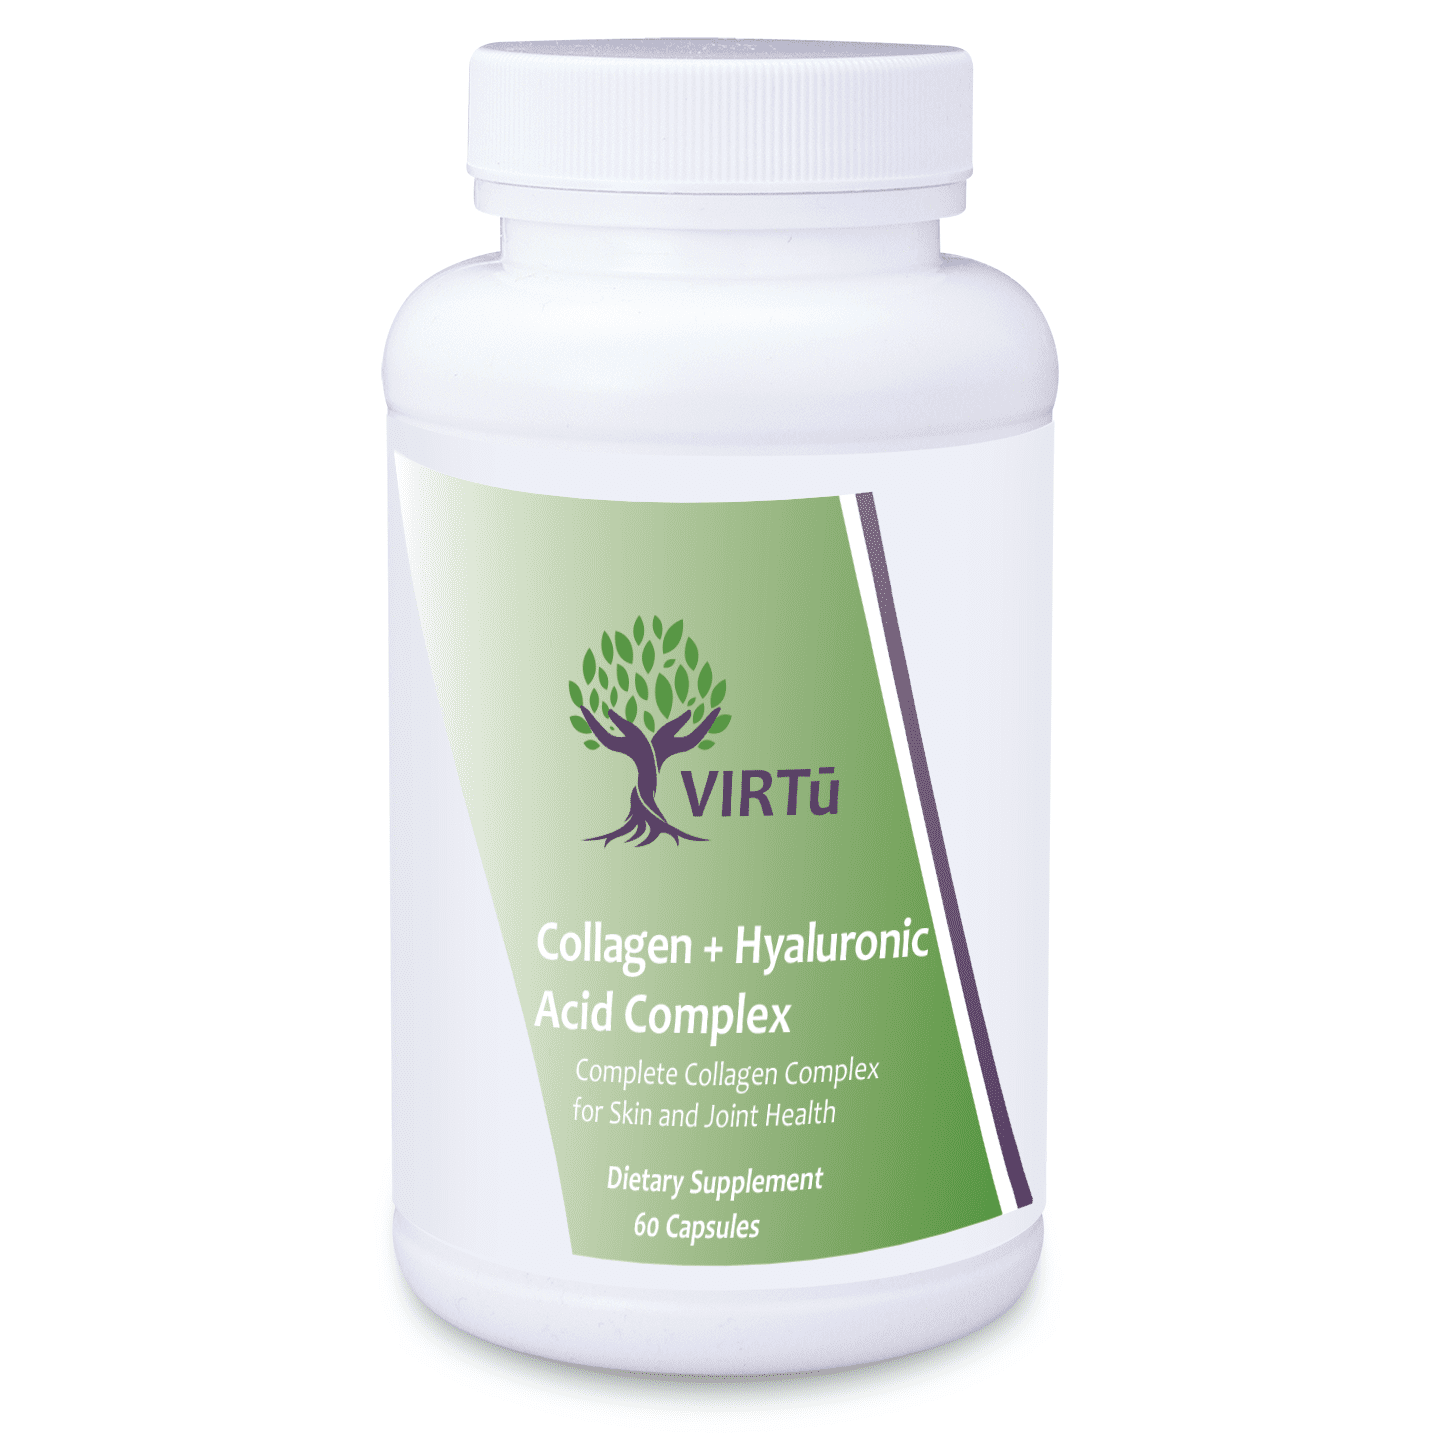 Collagen + Hyaluronic Acid Complex